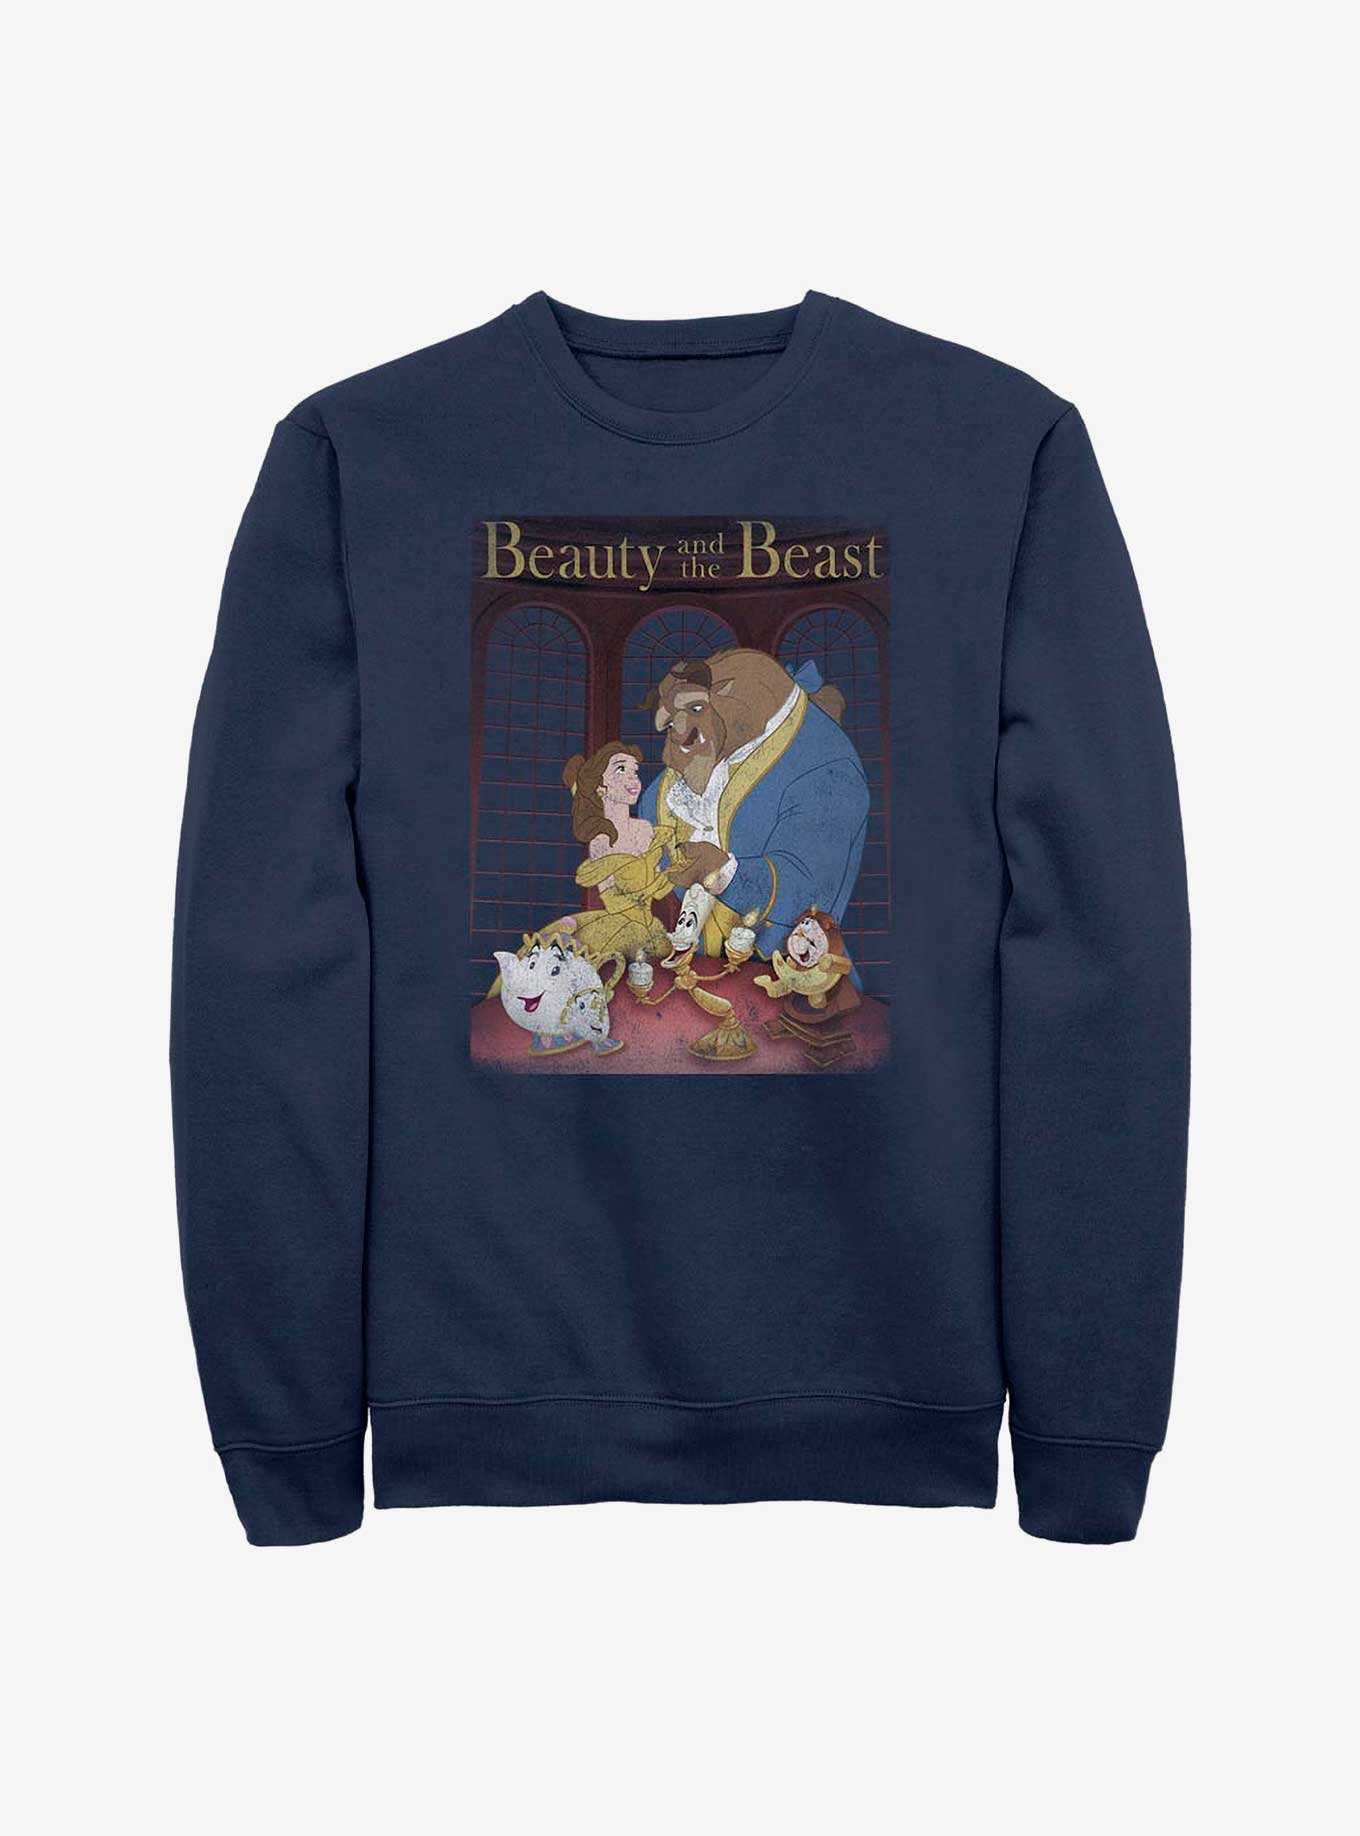 Disney Beauty And The Beast Poster Sweatshirt, , hi-res